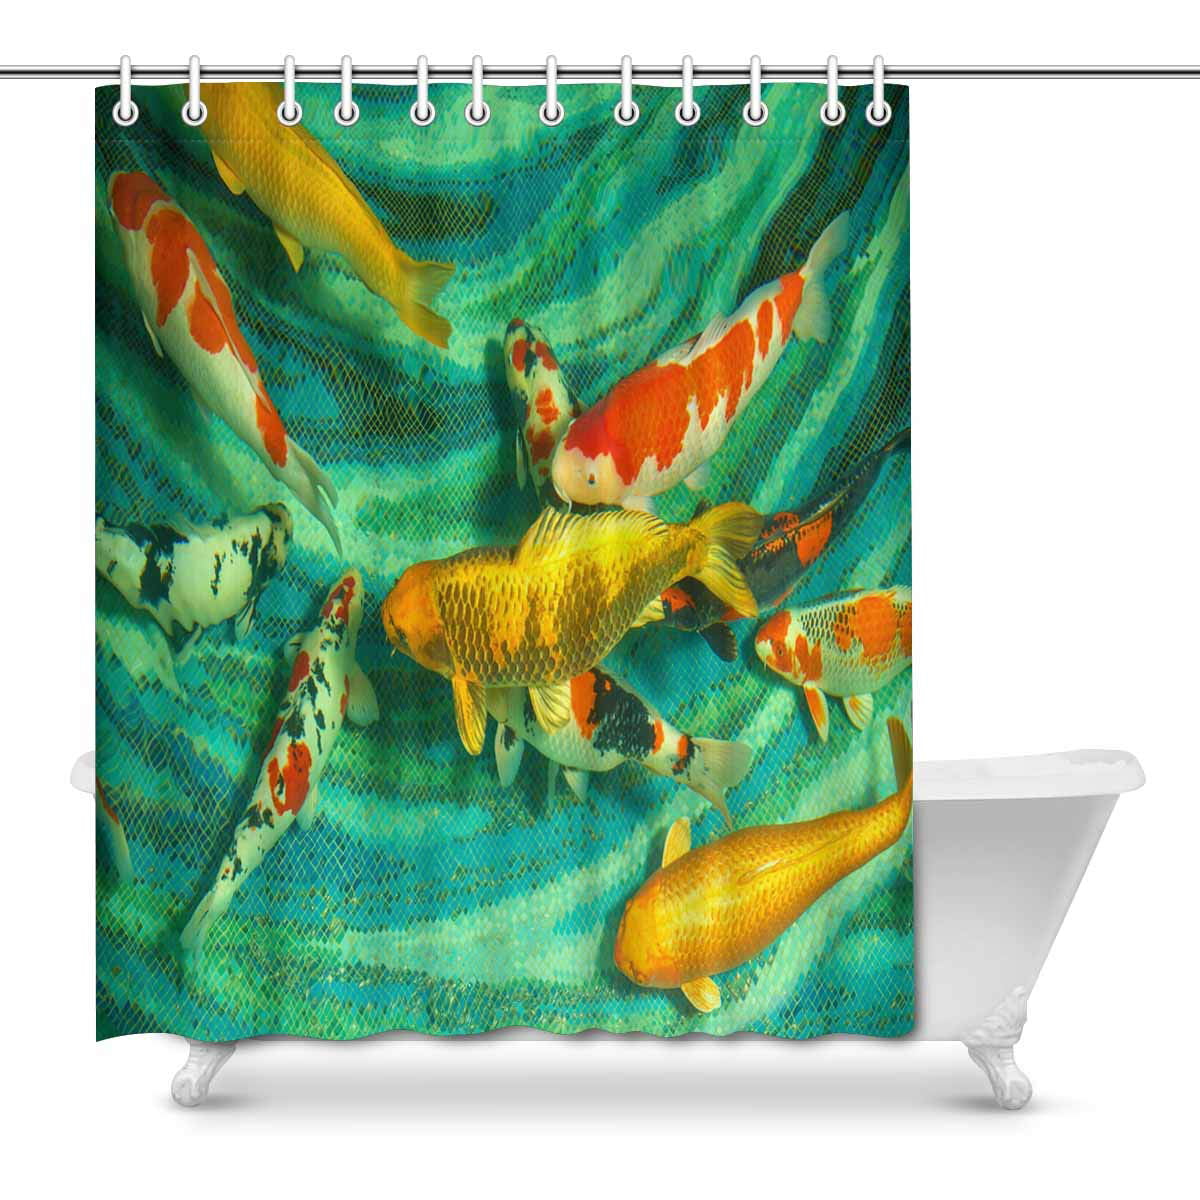 Koi Fish Summer Pond Shower Curtain Waterproof Polyester Fabric Bathroom Mat Set 